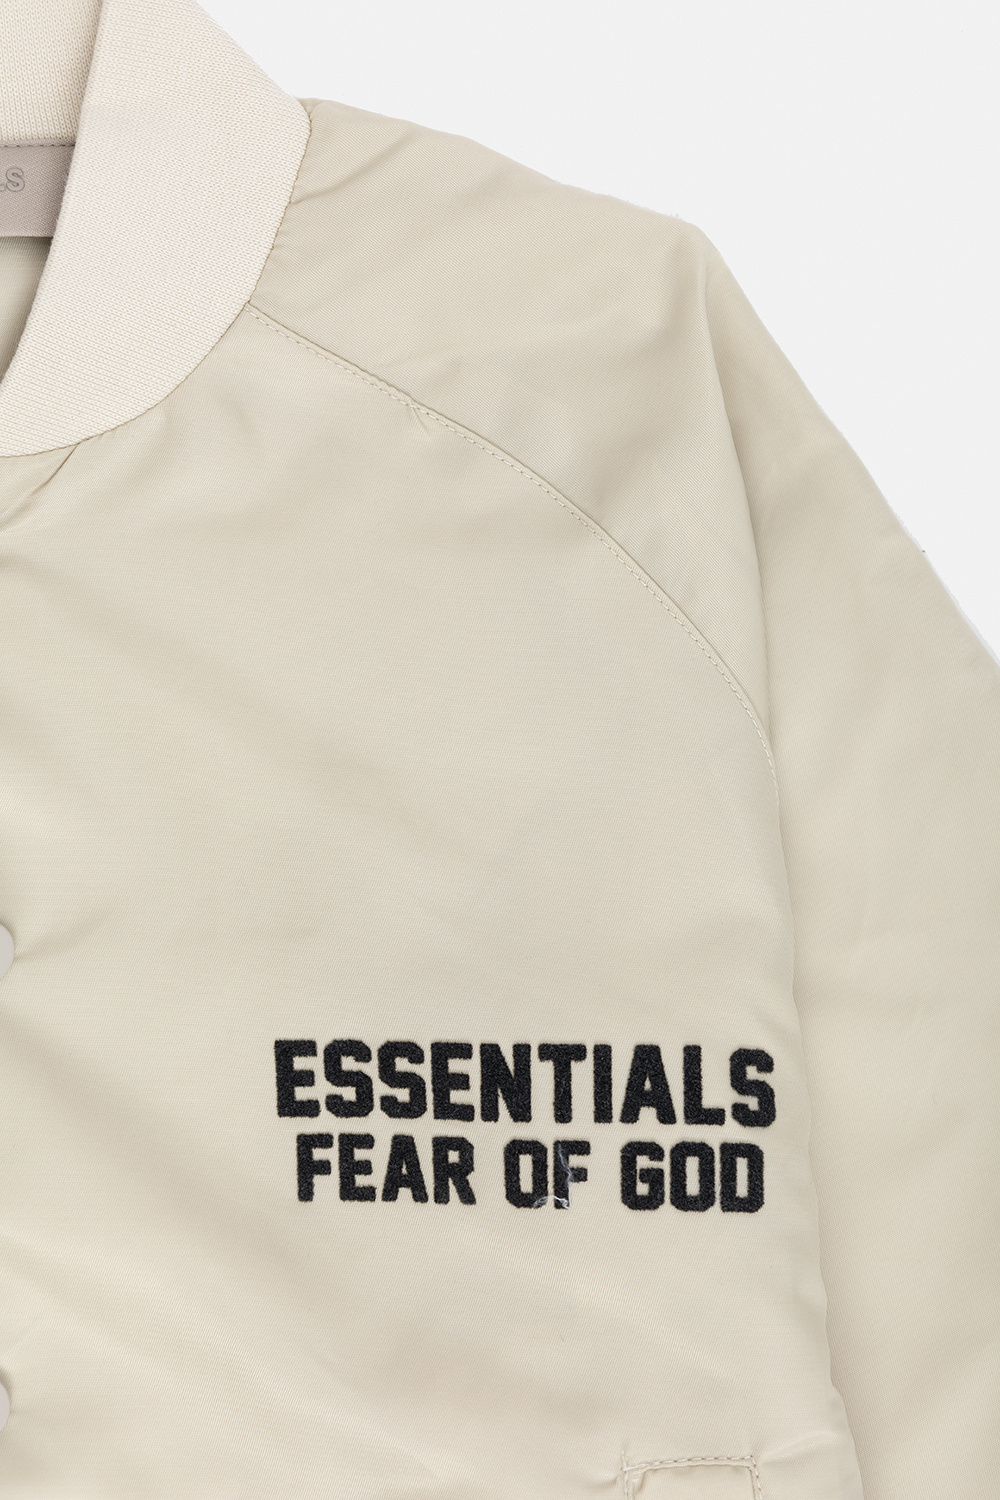 Fear Of God Essentials Kids Bomber jacket | Kids's Baby (0-36